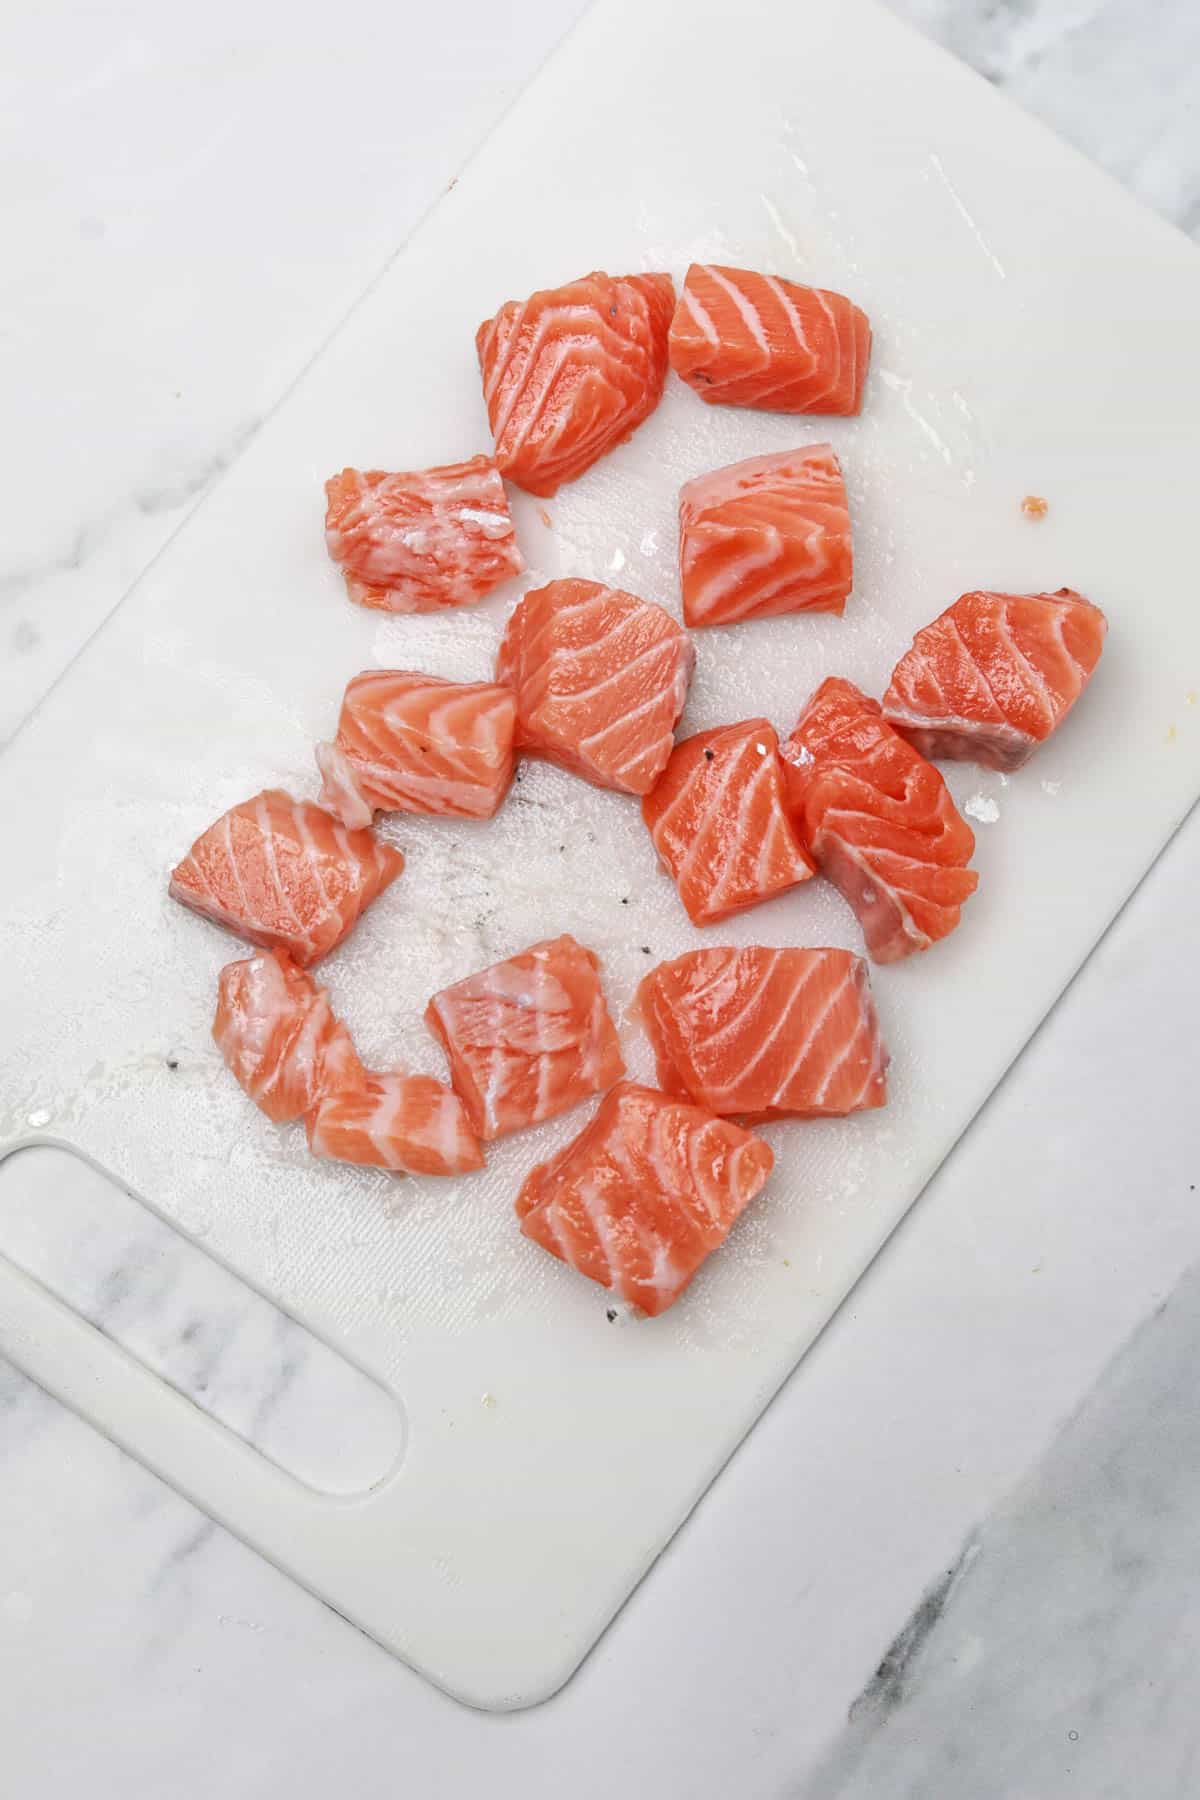 salmon fillets cut into salmon cubes.